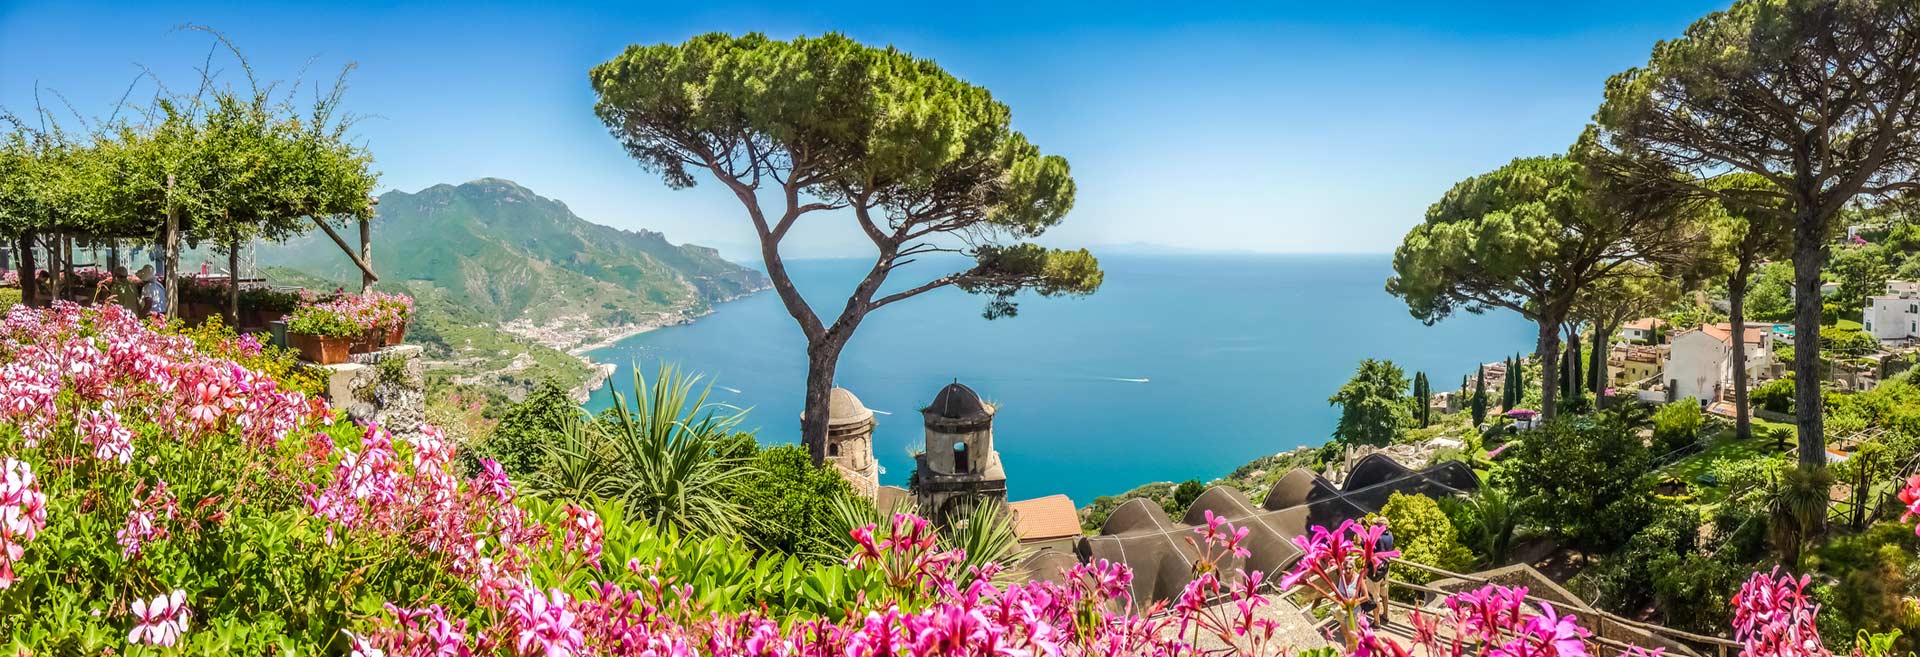 Hotels in Ischia, Capri, Procida, Neapel und der Amalfiküste